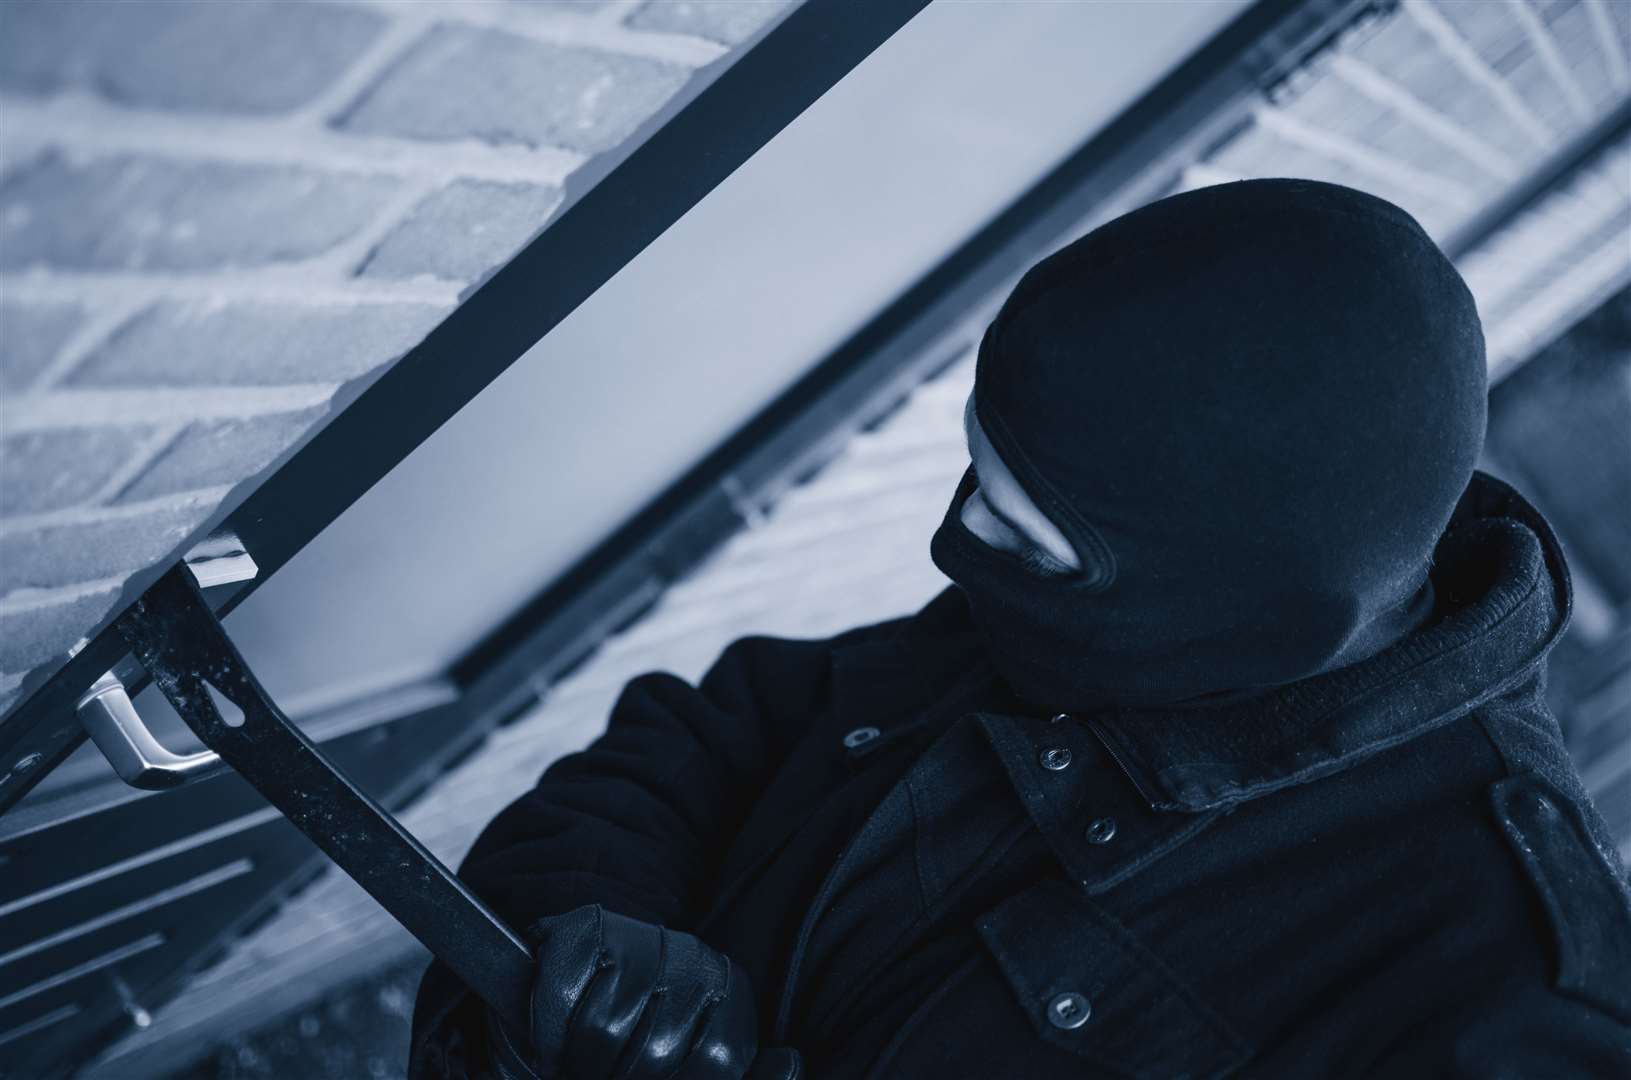 A man was arrested on suspicion of burglary